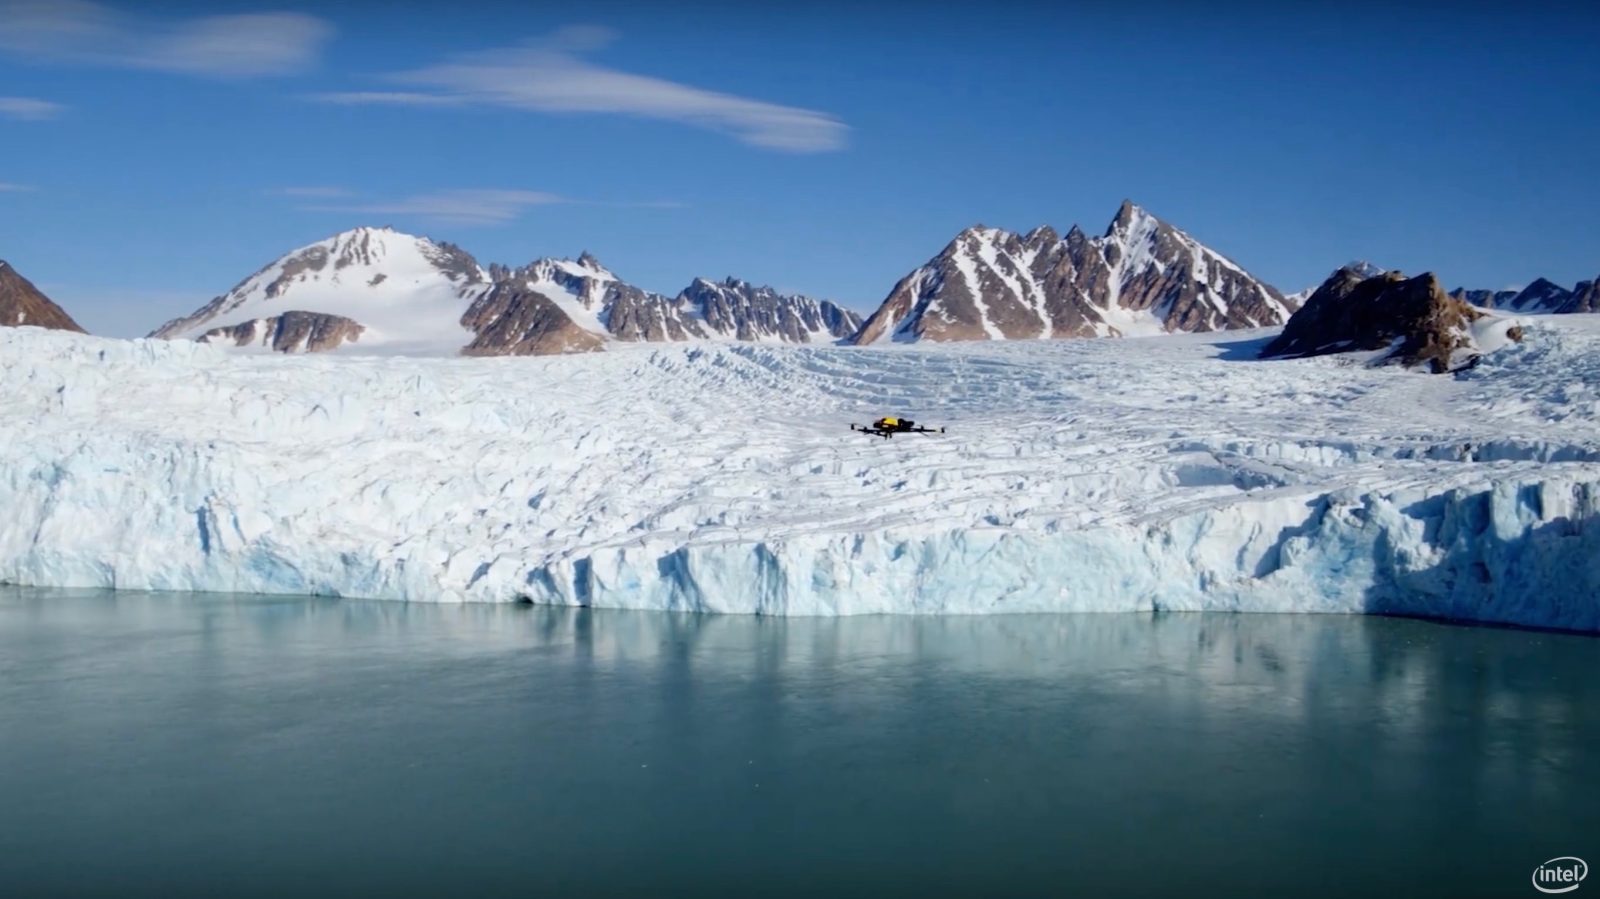 Intel's Falcon 8+ drone observes polar bears in the Arctic